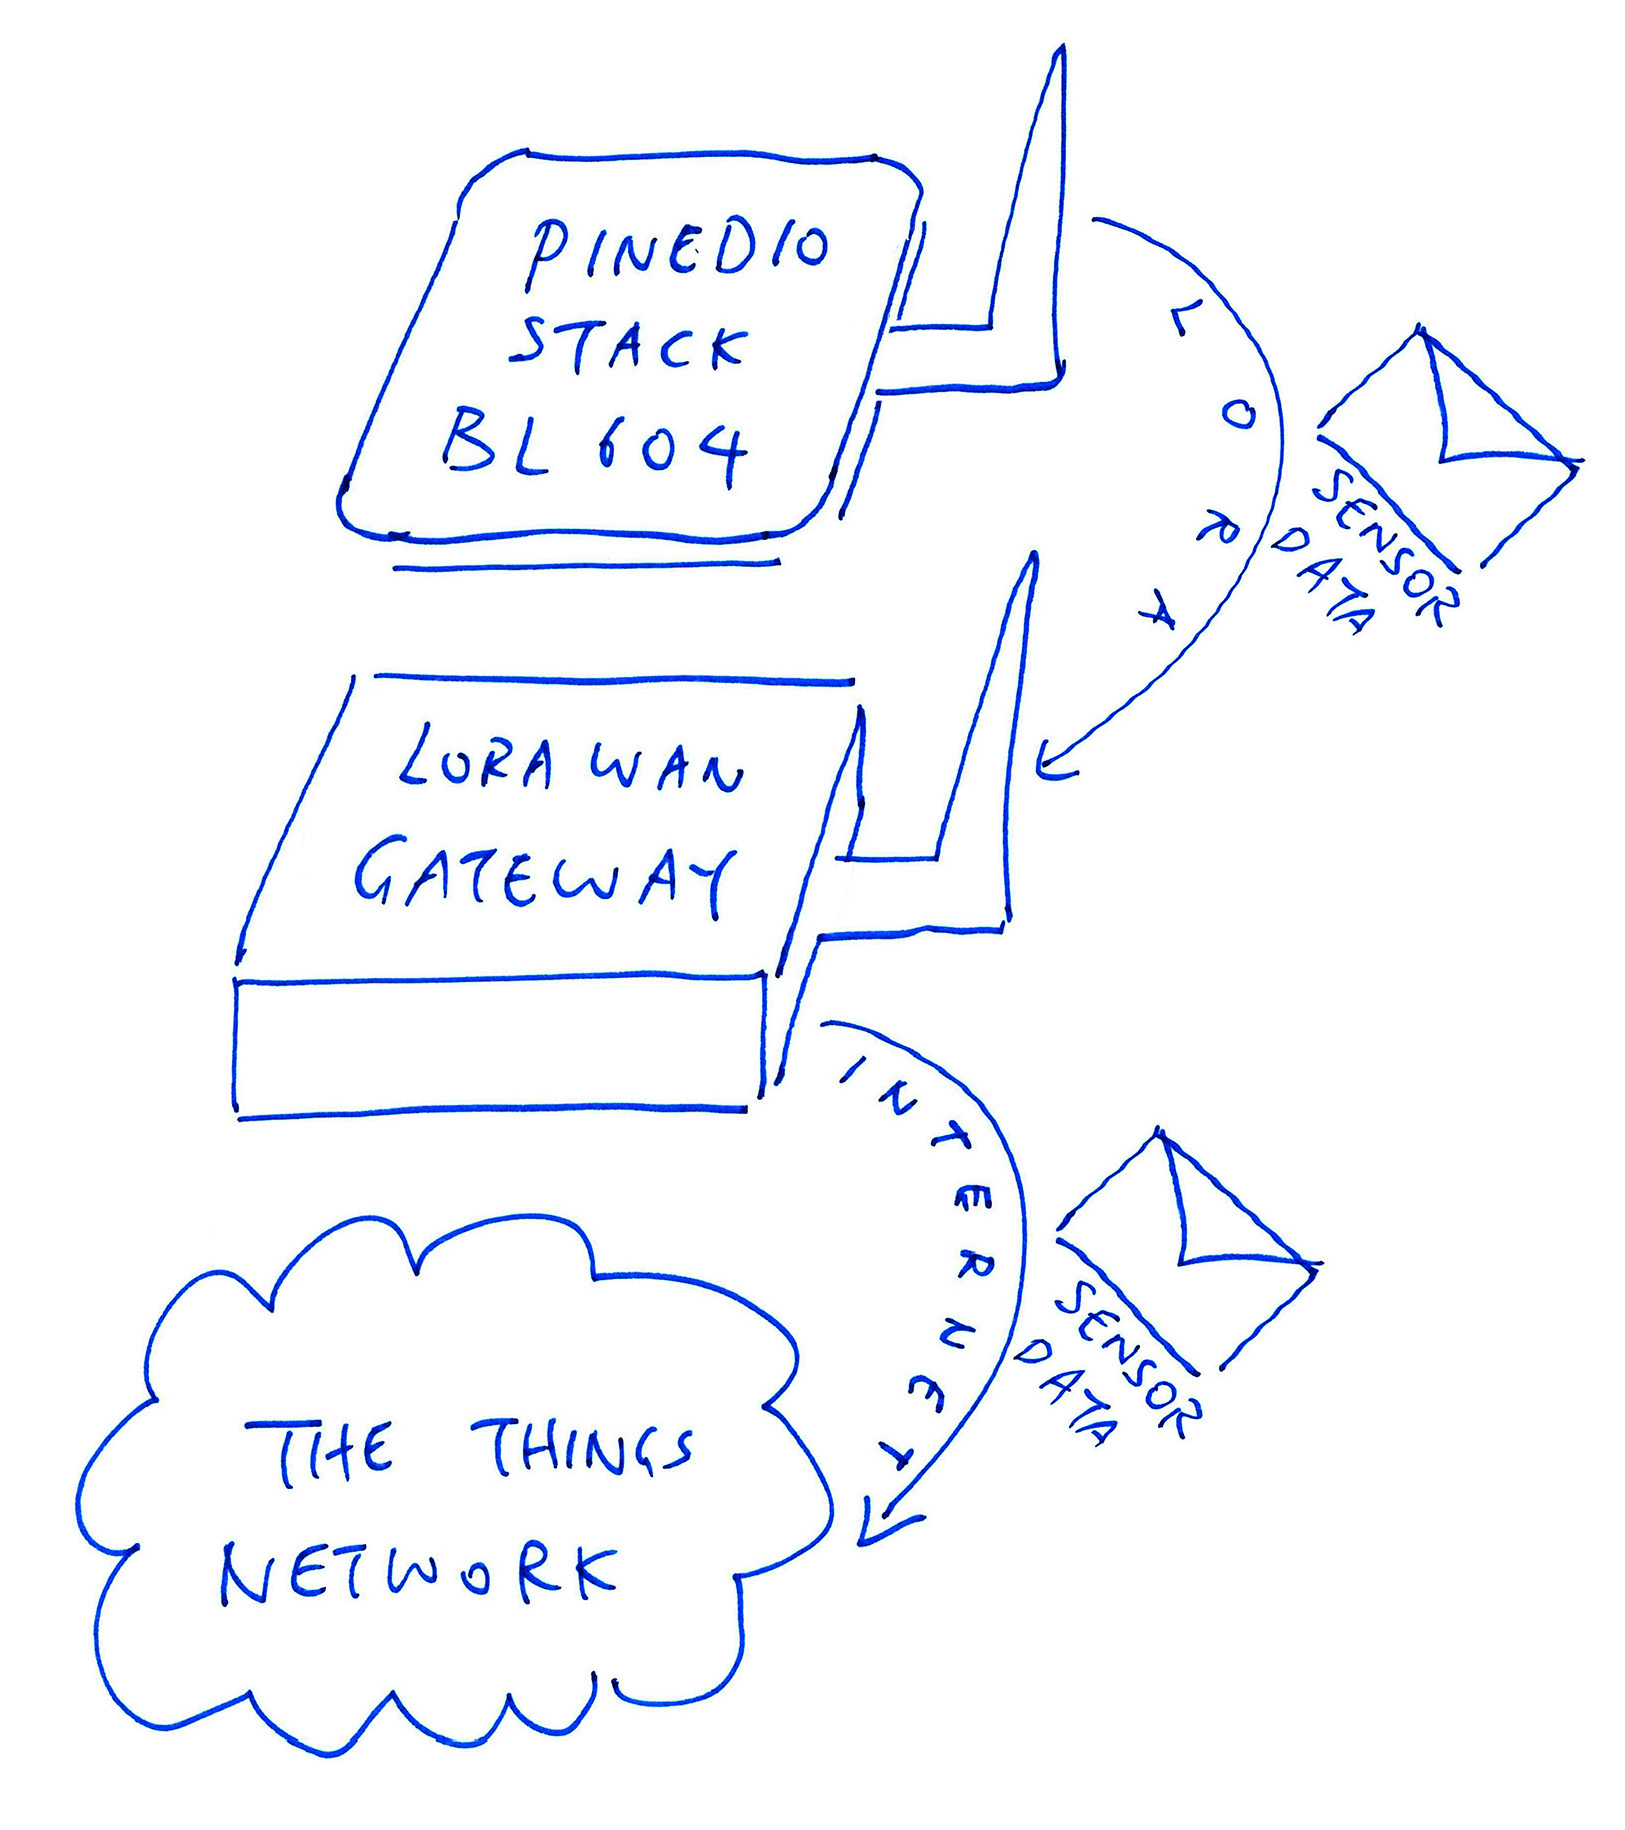 PineDio Stack BL604 talking to The Things Network via LoRaWAN Gateway